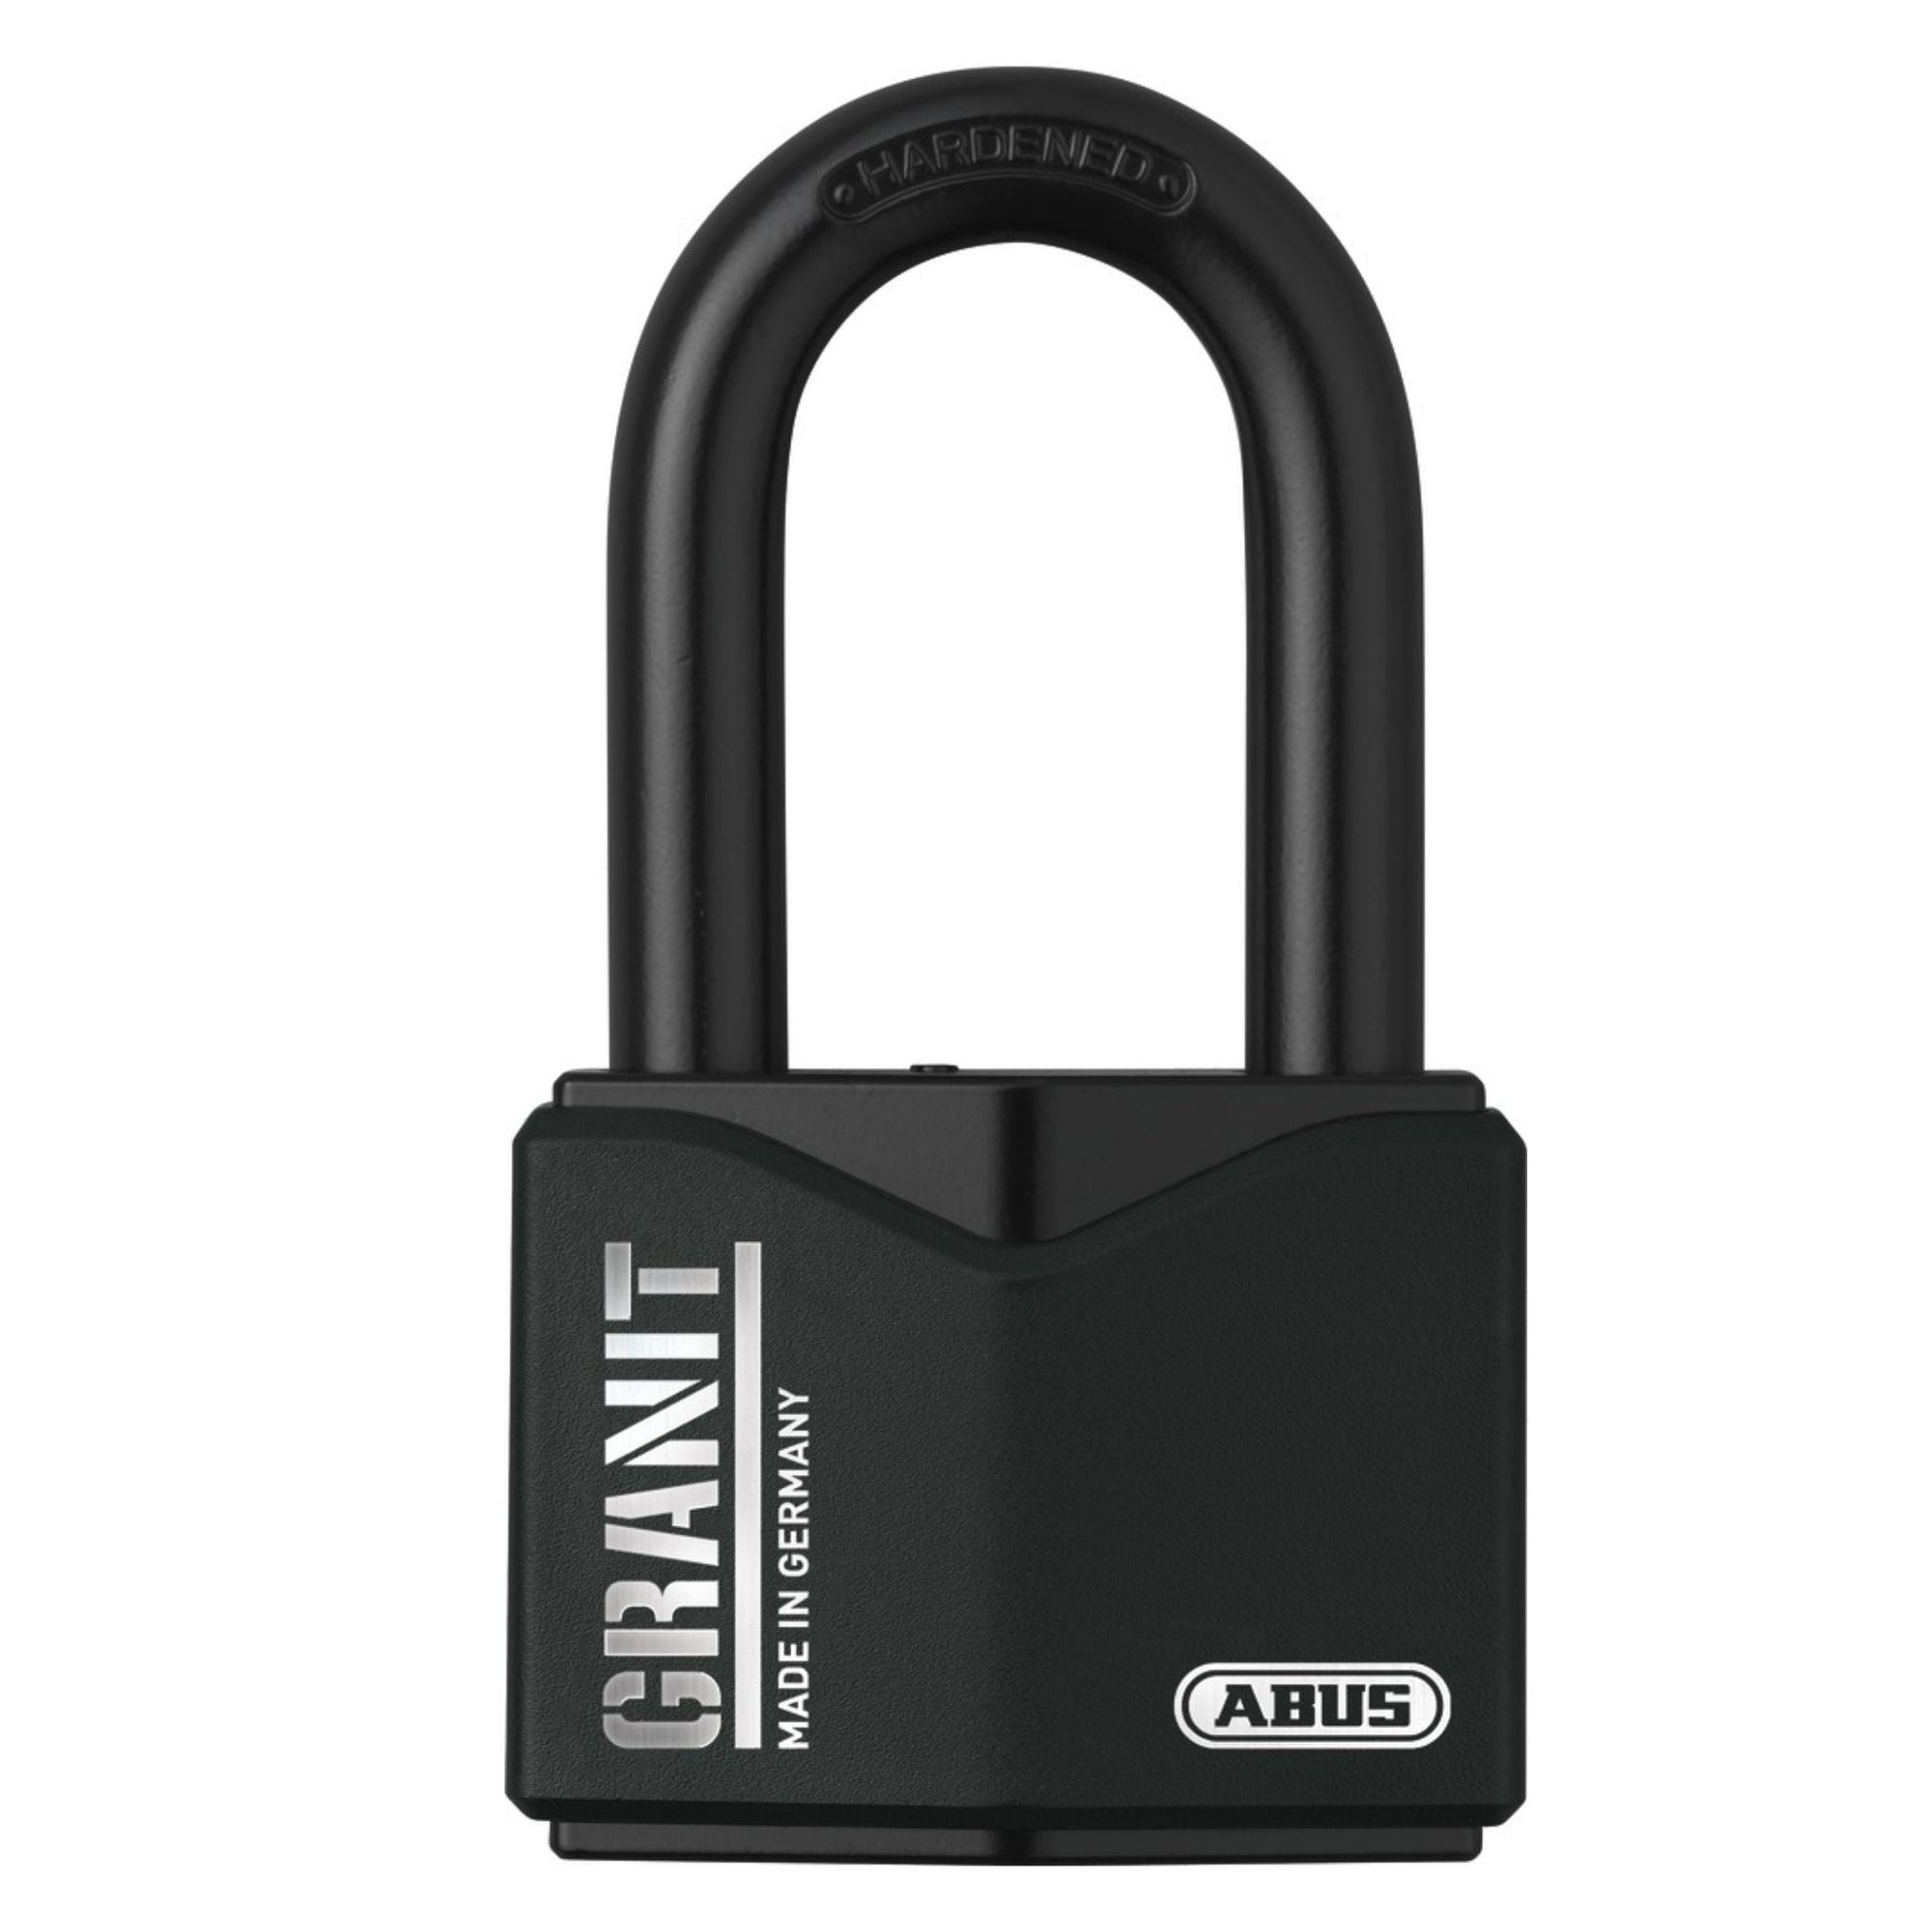 Abus 37/55HB50 KA 4346523 Granit Padlock Keyed Alike Locks with 2" Shackle Match to Existing Key# KA4346523 - The Lock Source